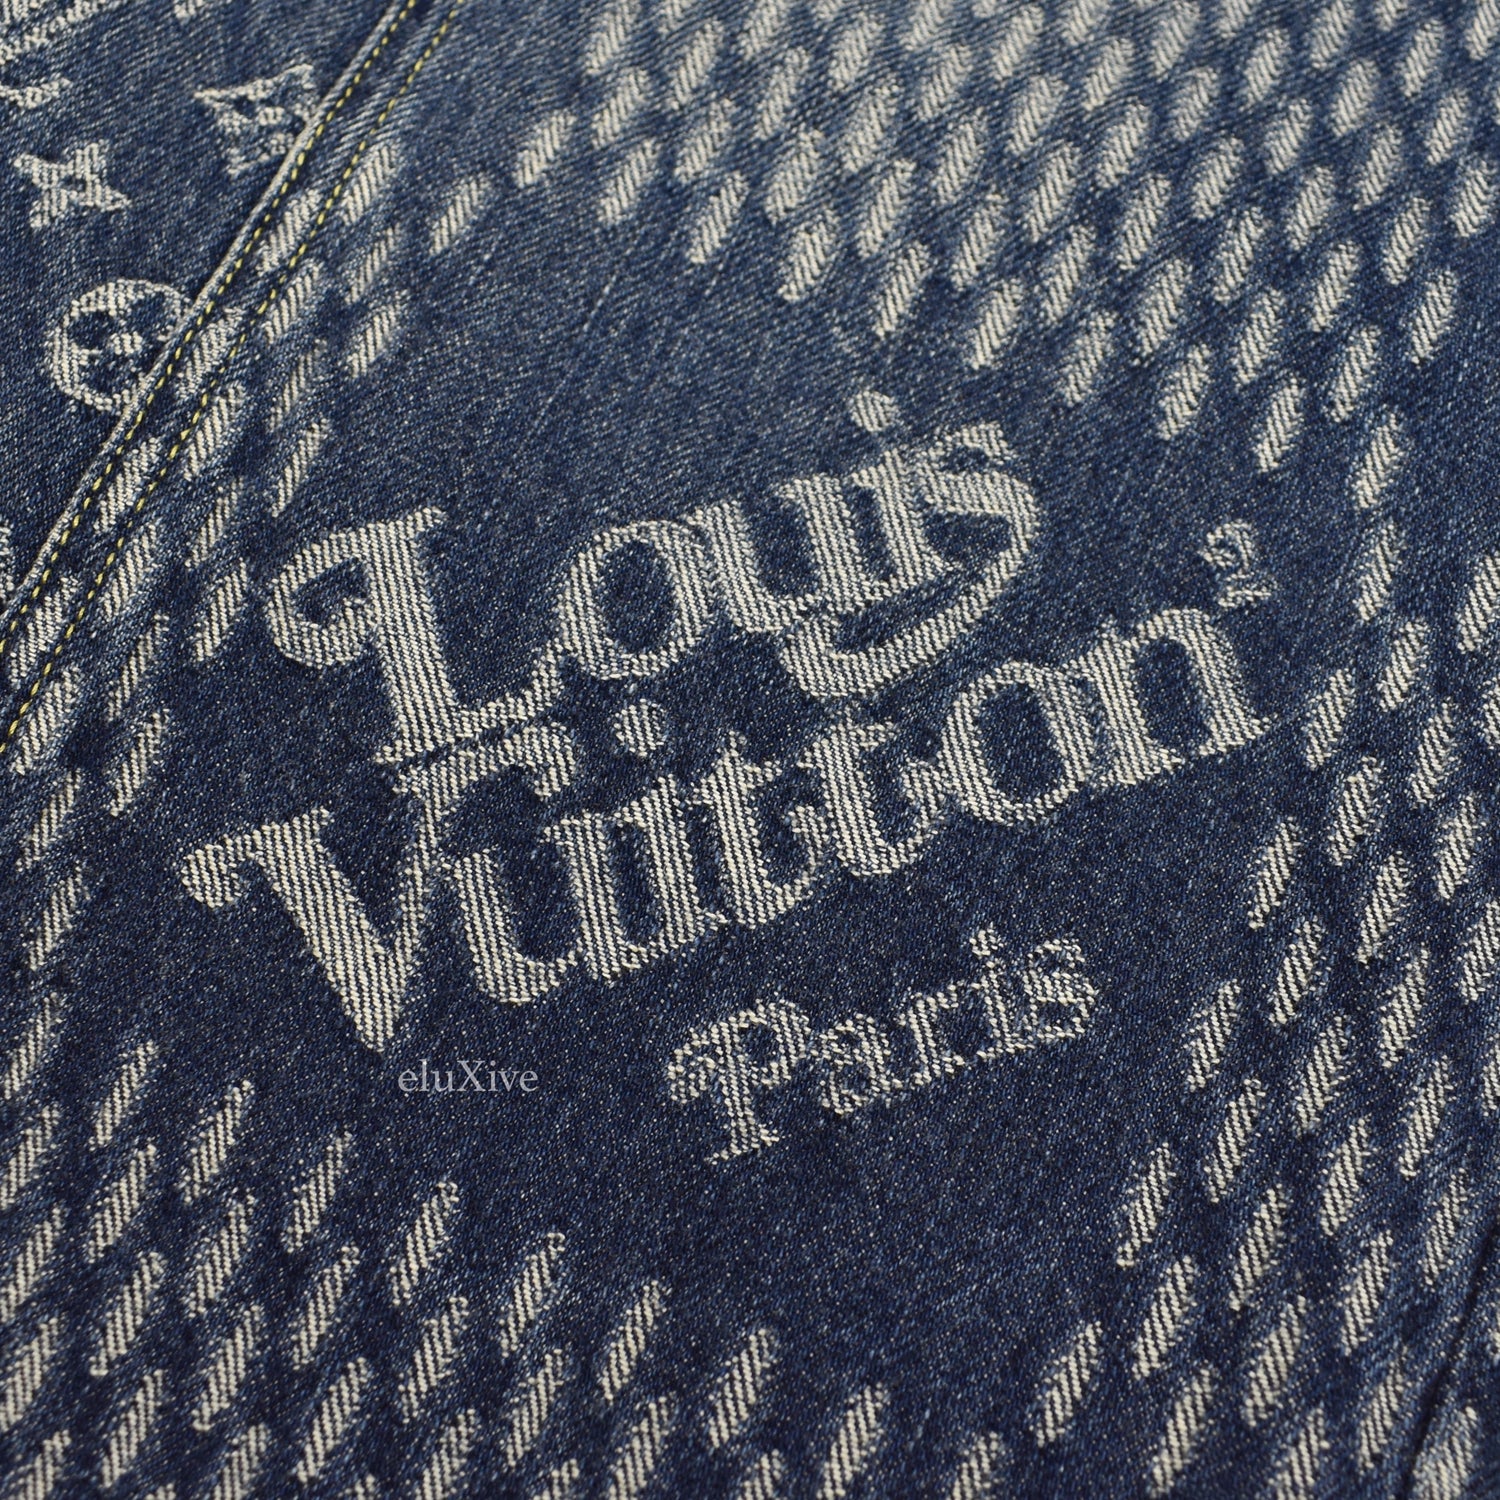 LOUIS VUITTON x NIGO Giant Damier Waves Monogram Denim Jacket